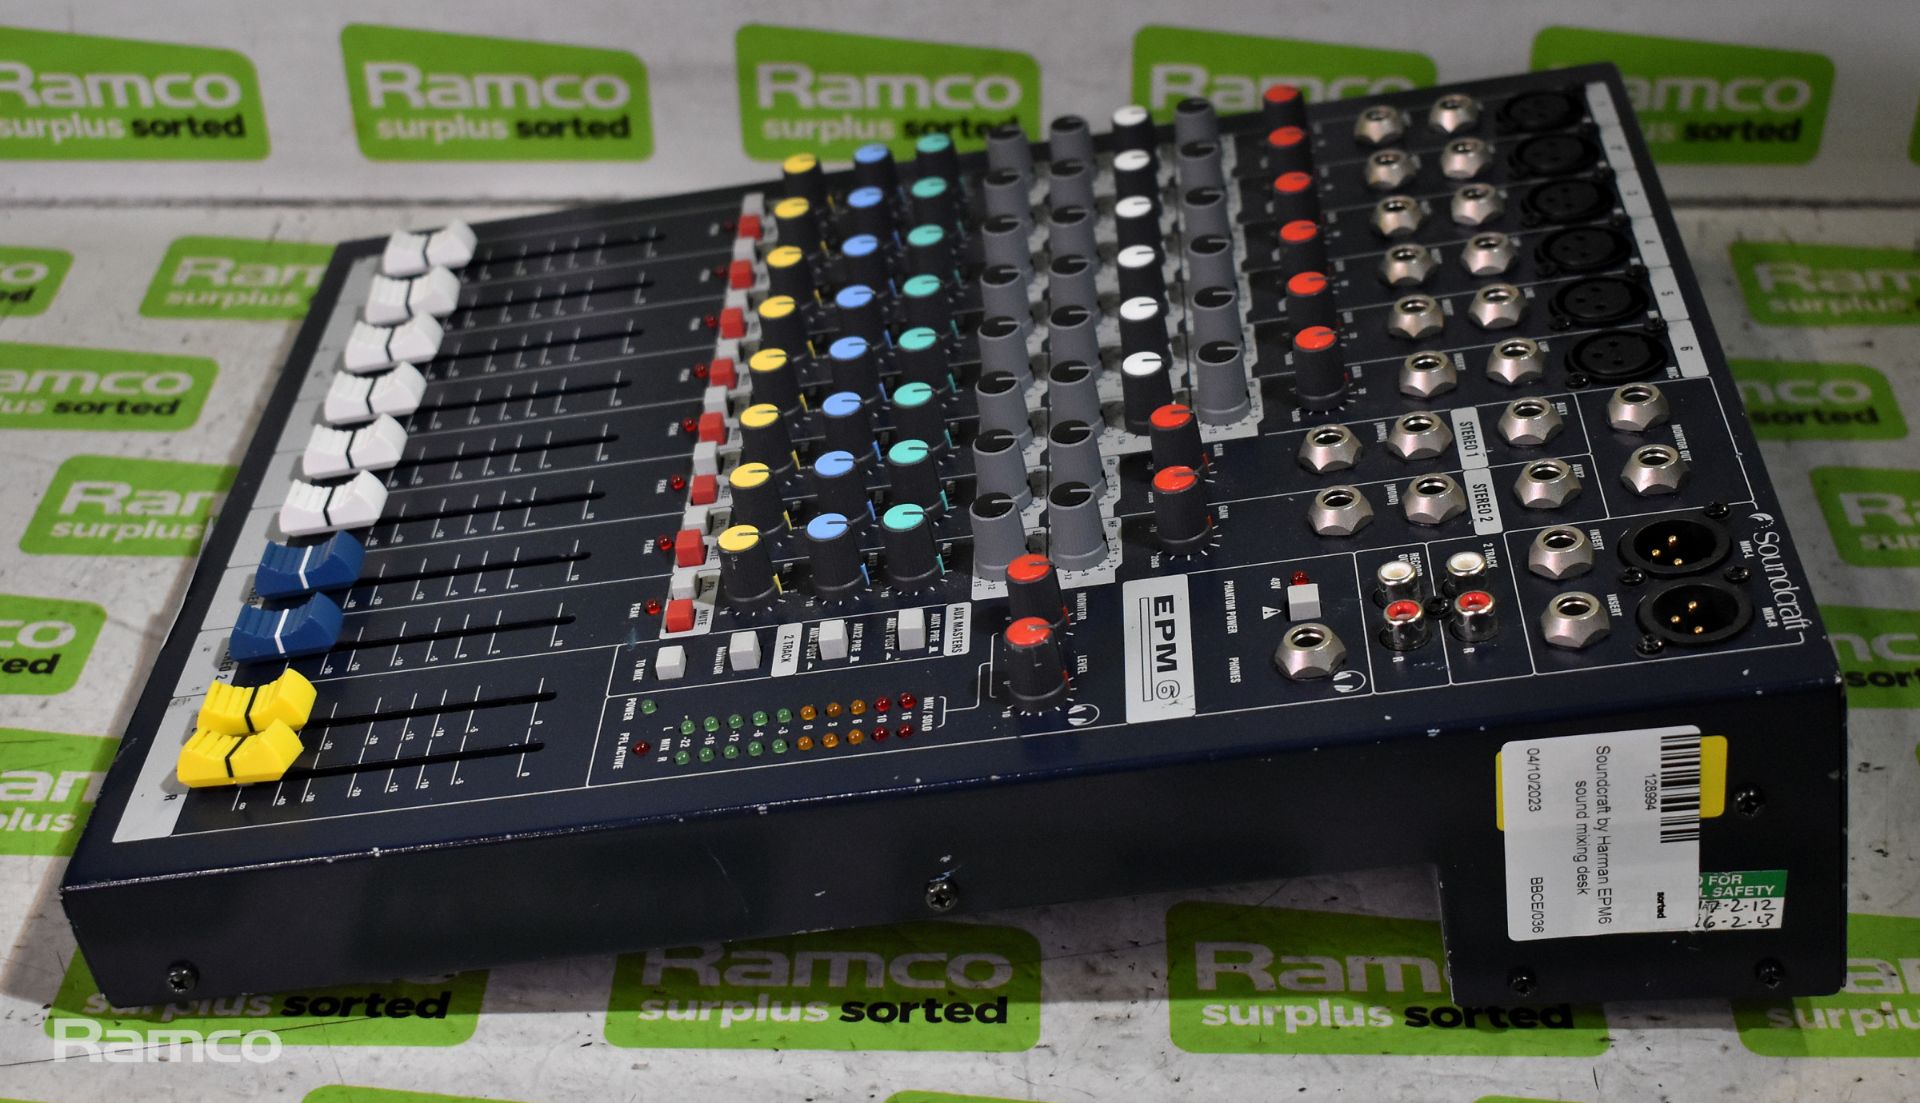 360 Systems SC-182 Shortcut personal audio editor, Denon DN-X400 4 channel DJ mixer - Image 10 of 19